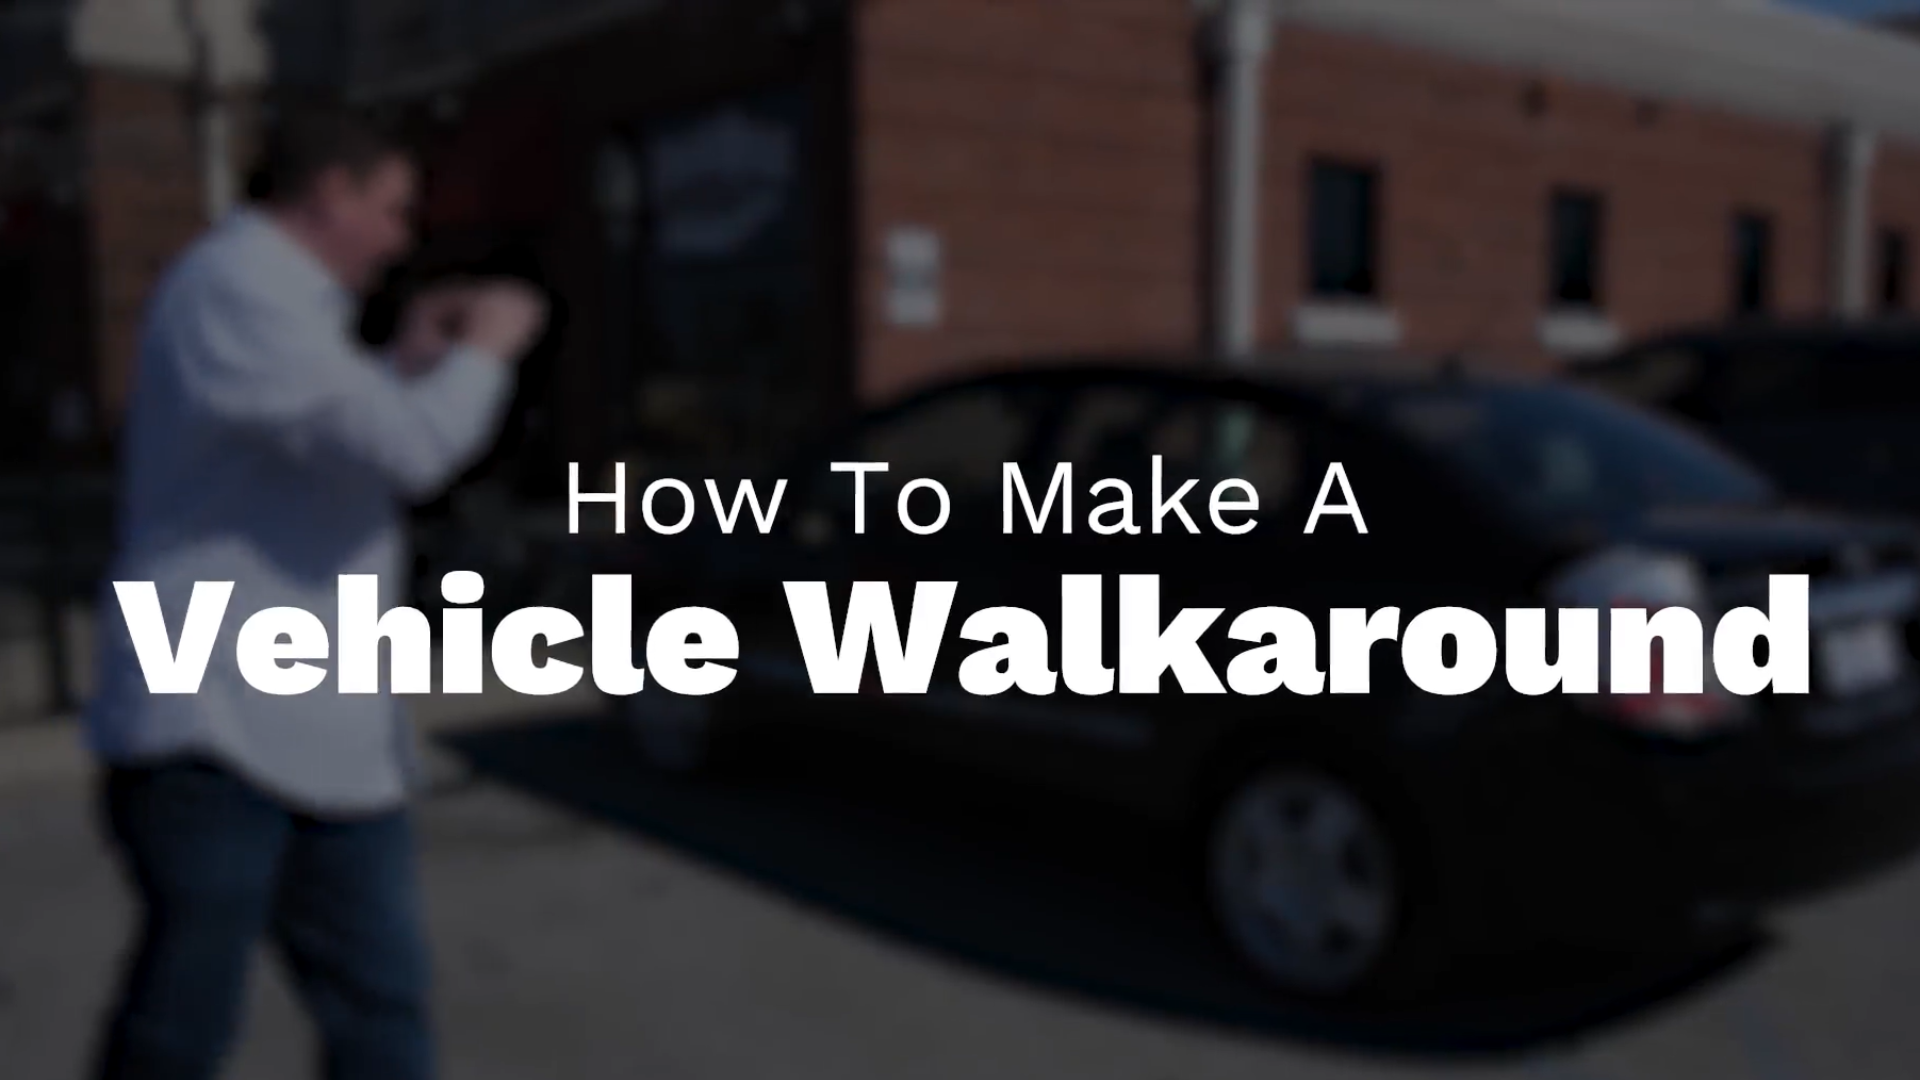 How to Make a Vehicle Walkaround